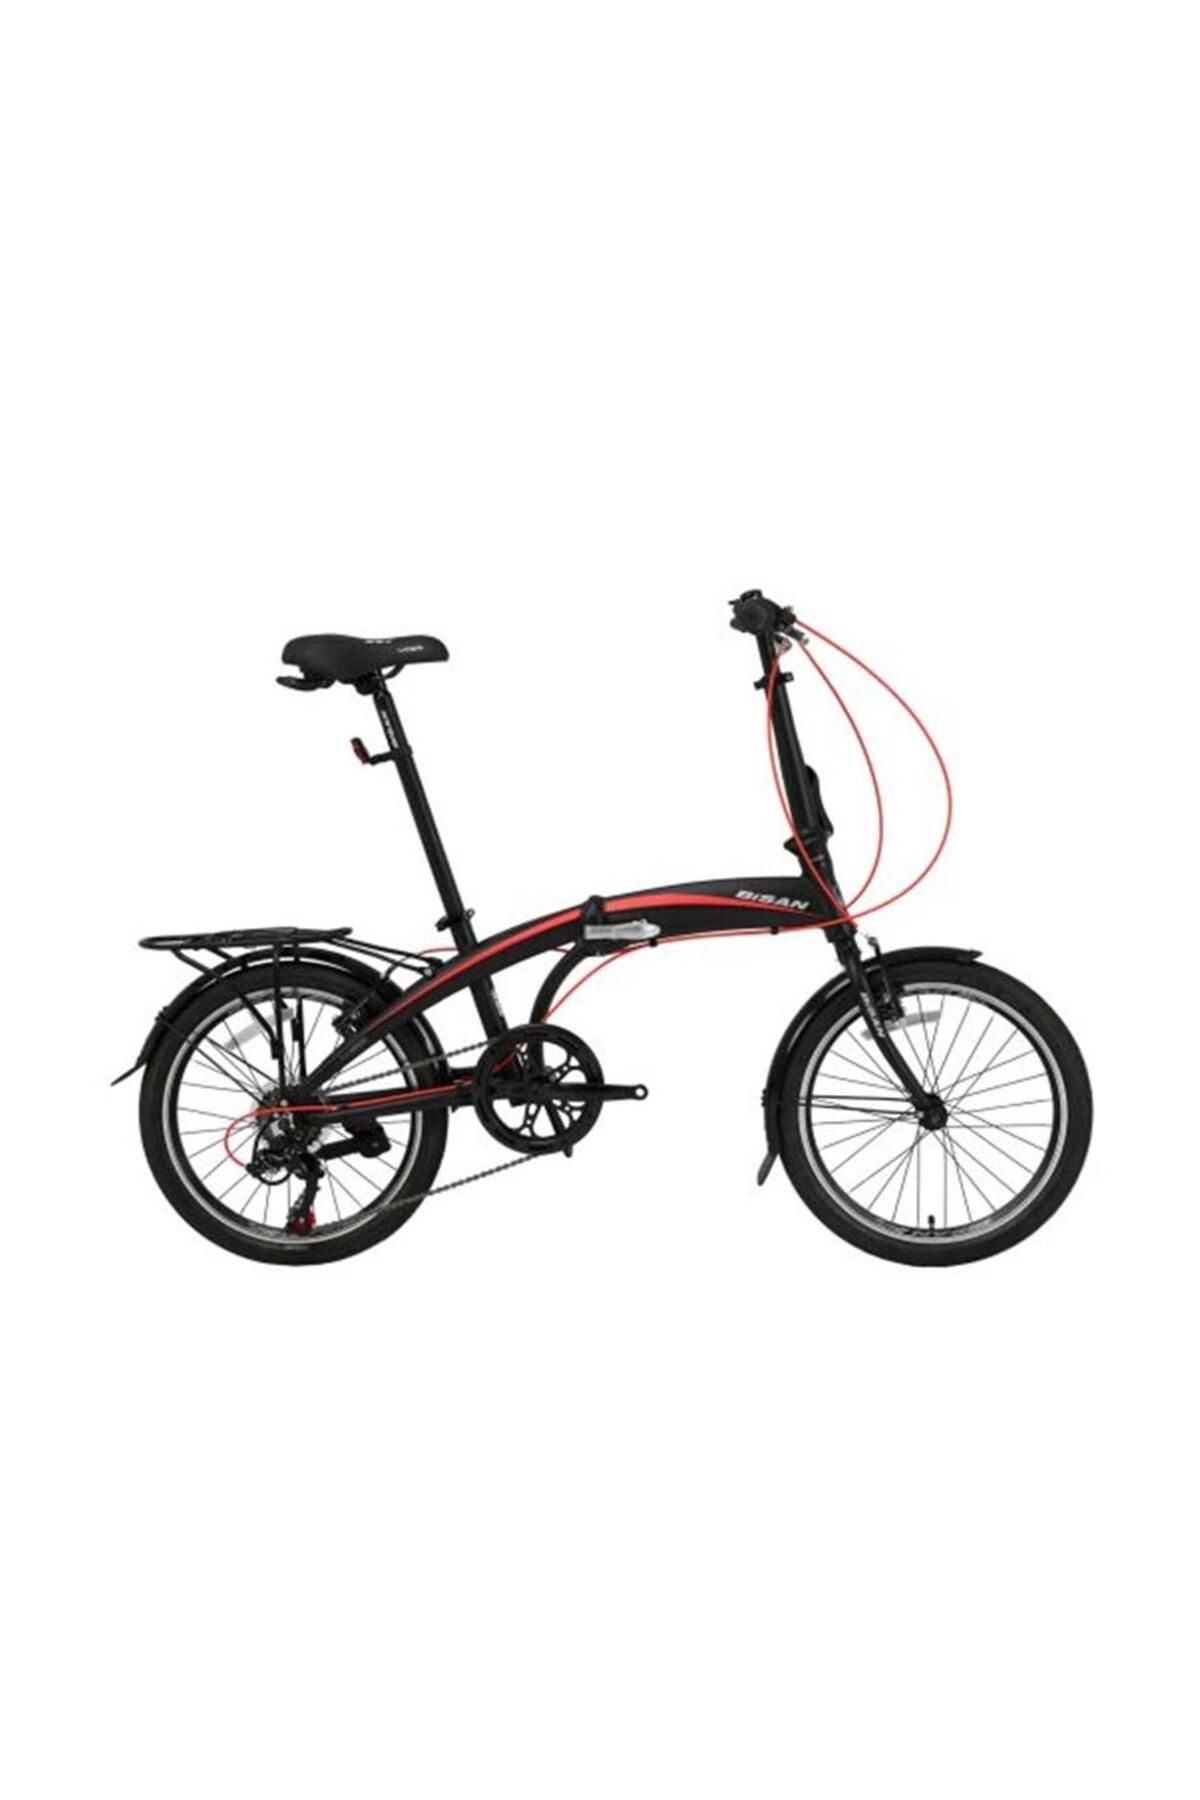 Bisan Fx 3500-trn Katlanır Bisiklet 280cm V 20 Jant 7 Vites Siyah Kırmızı